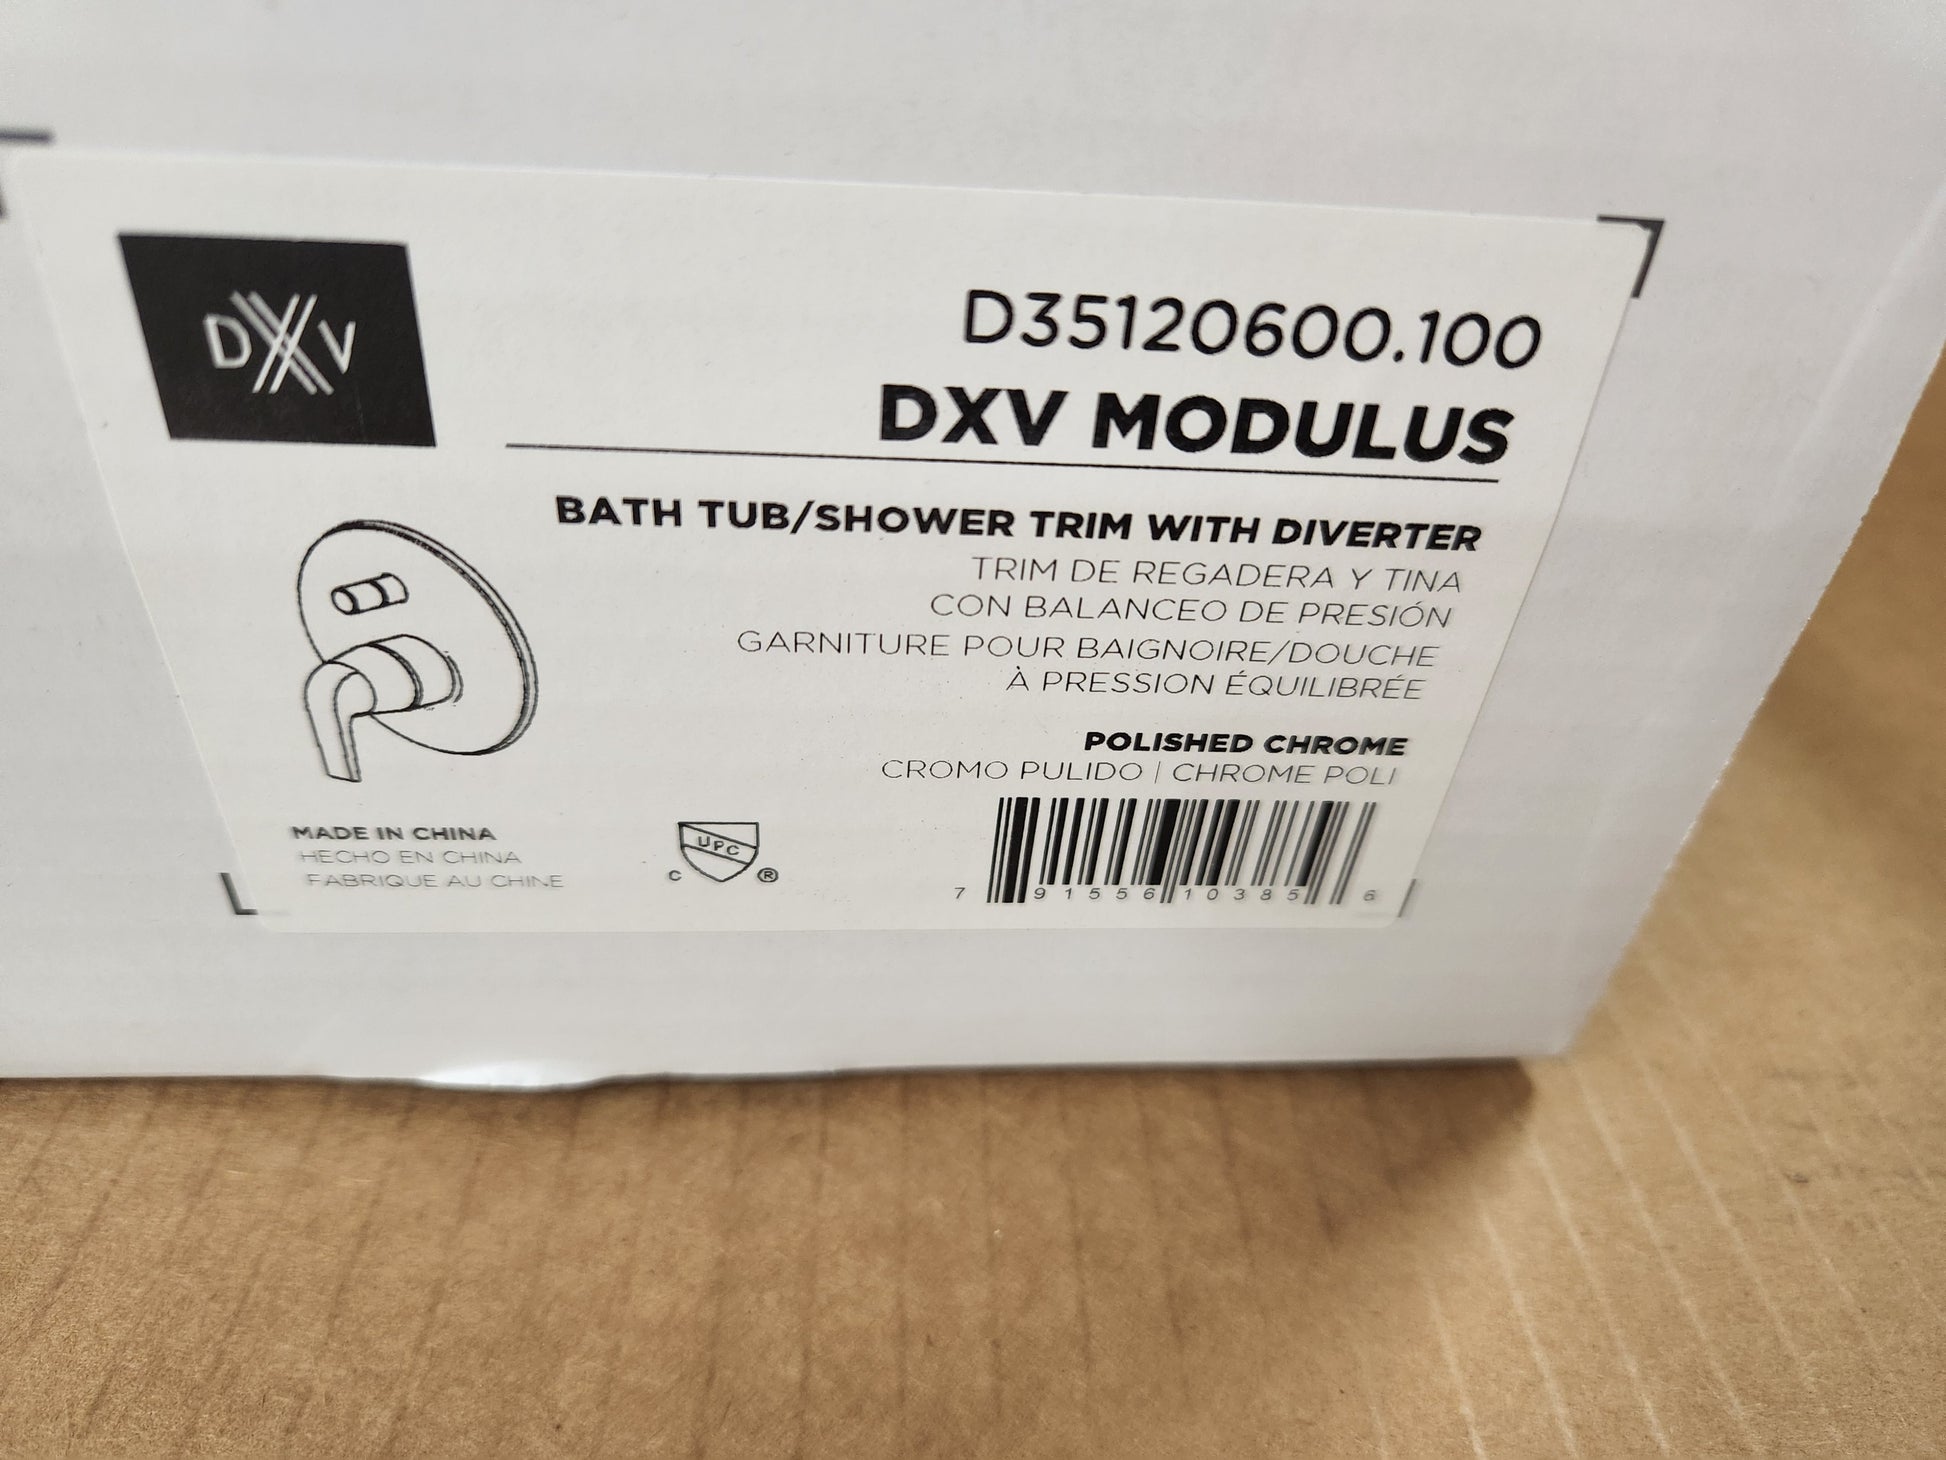 DXV MODULUS POLISHED CHROME BATH TUB/SHOWER TRIM WITH DIVERTER